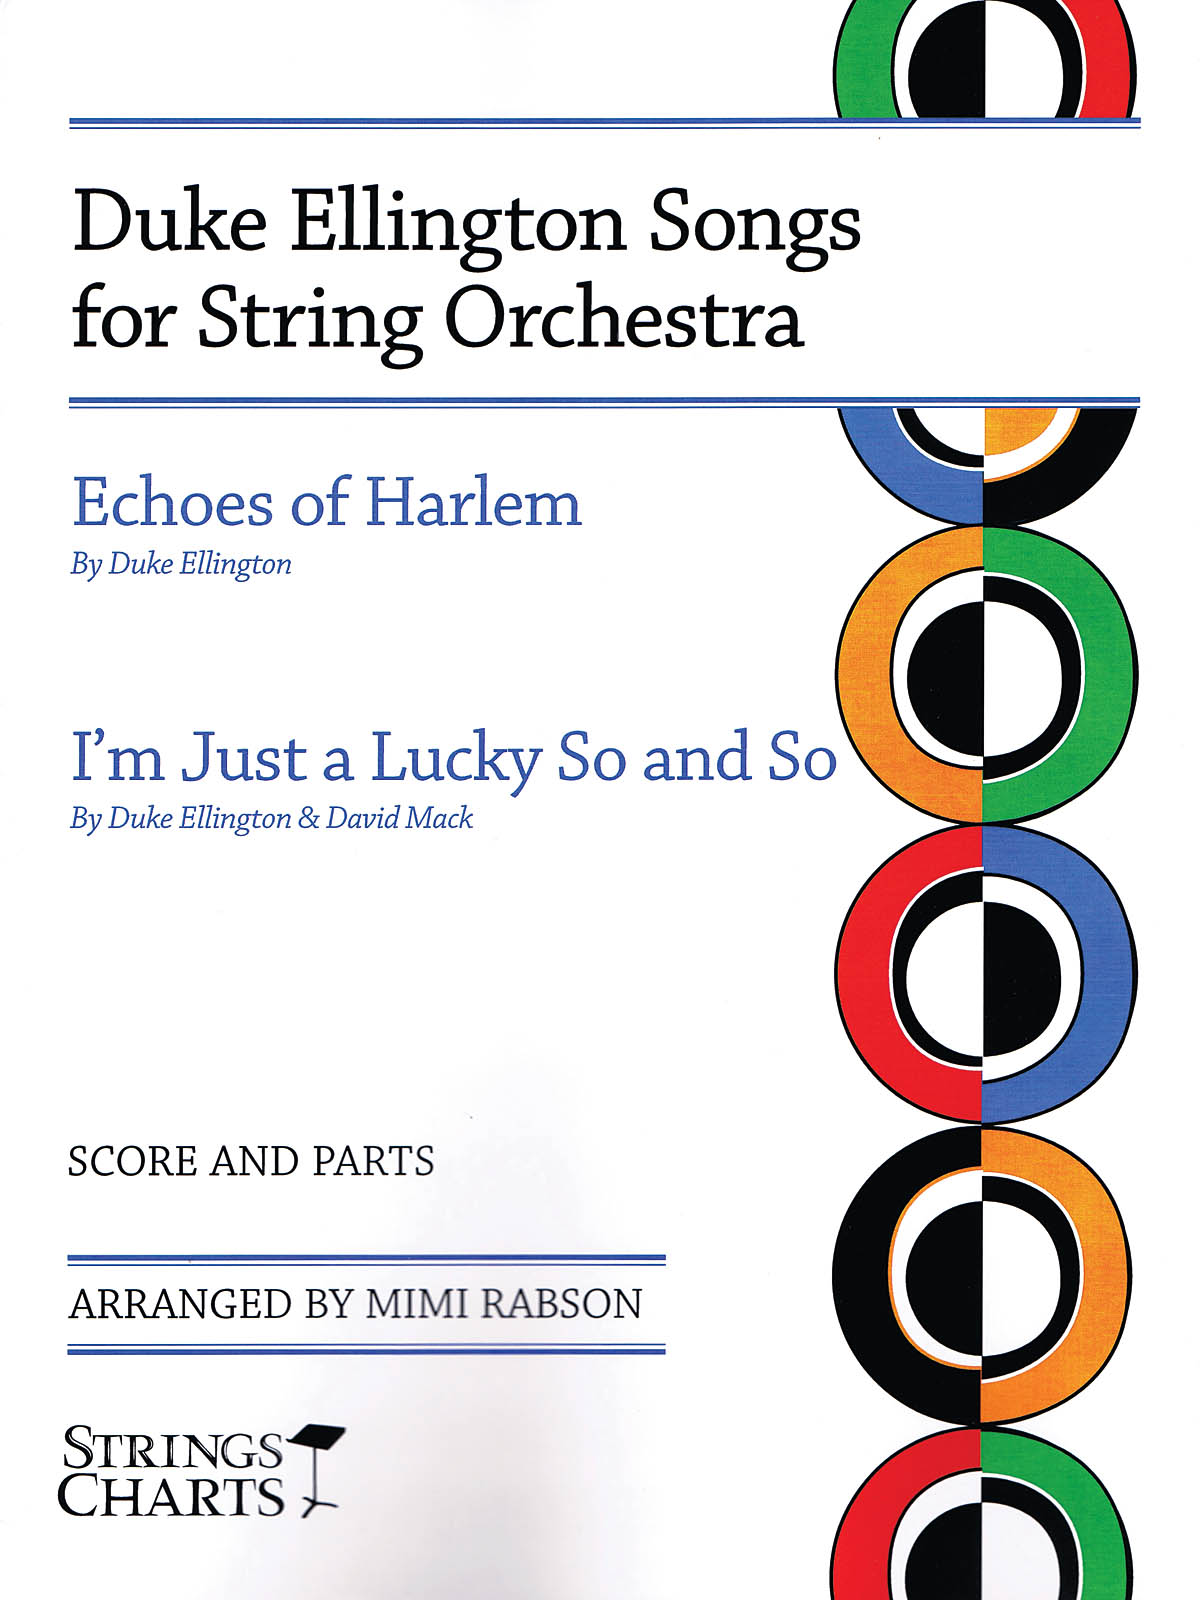 Duke Ellington Songs For String Orchestra(Strings Charts Series)